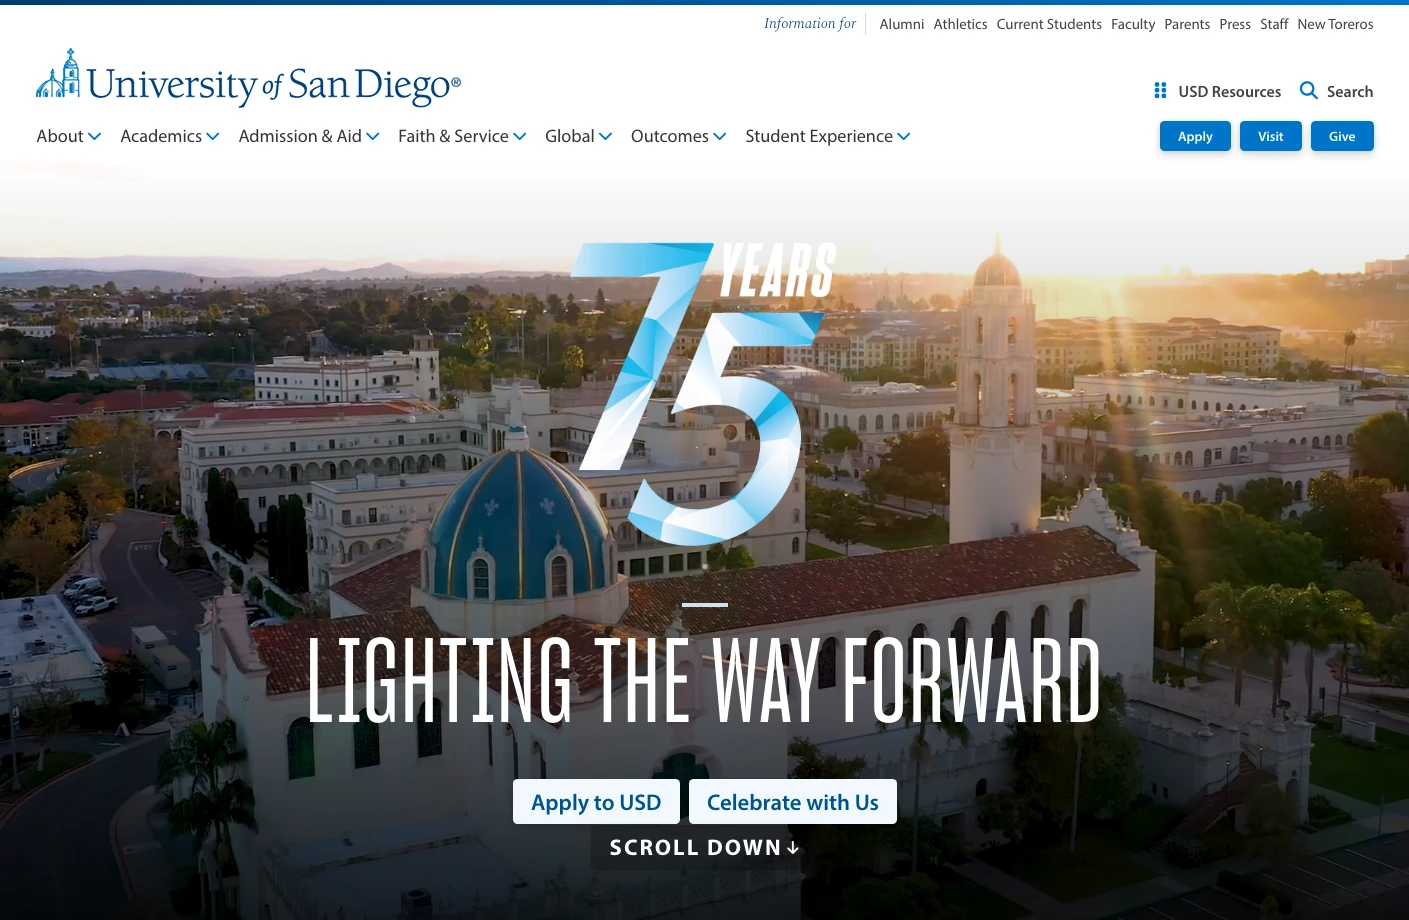 screenshot from University of San Diego website